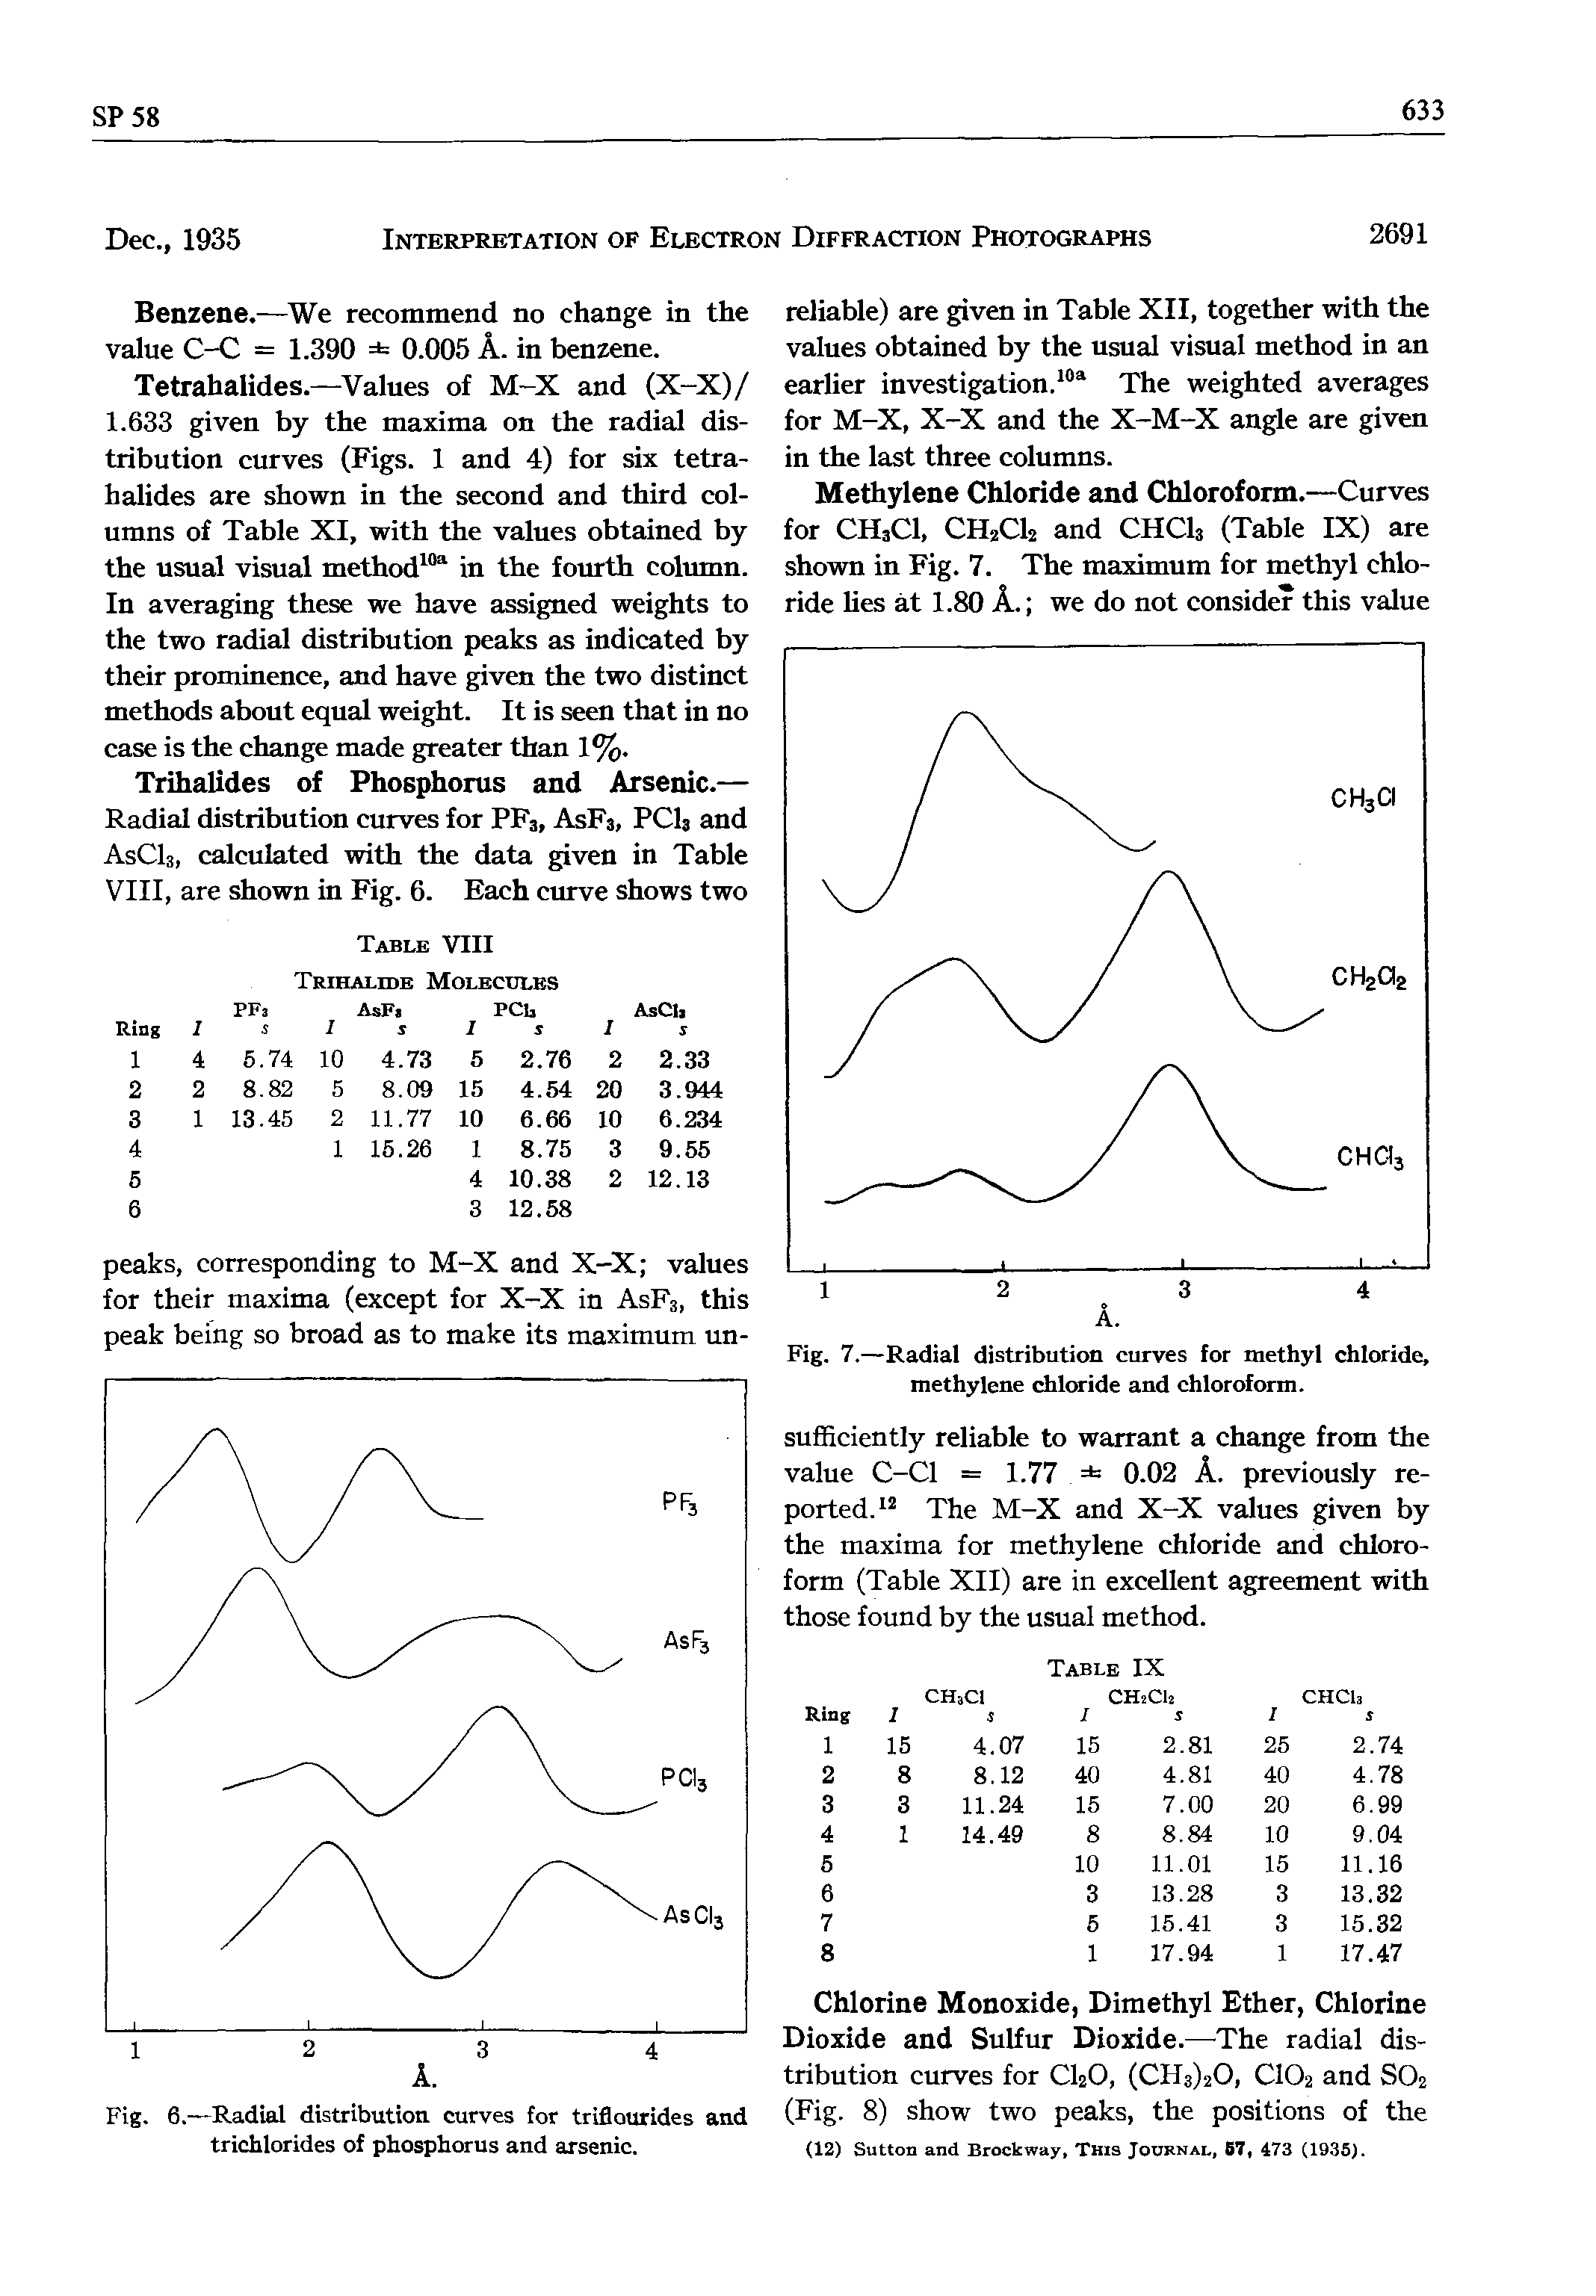 Fig. 7.—Radial distribution curves for methyl chloride, methylene chloride and chloroform.